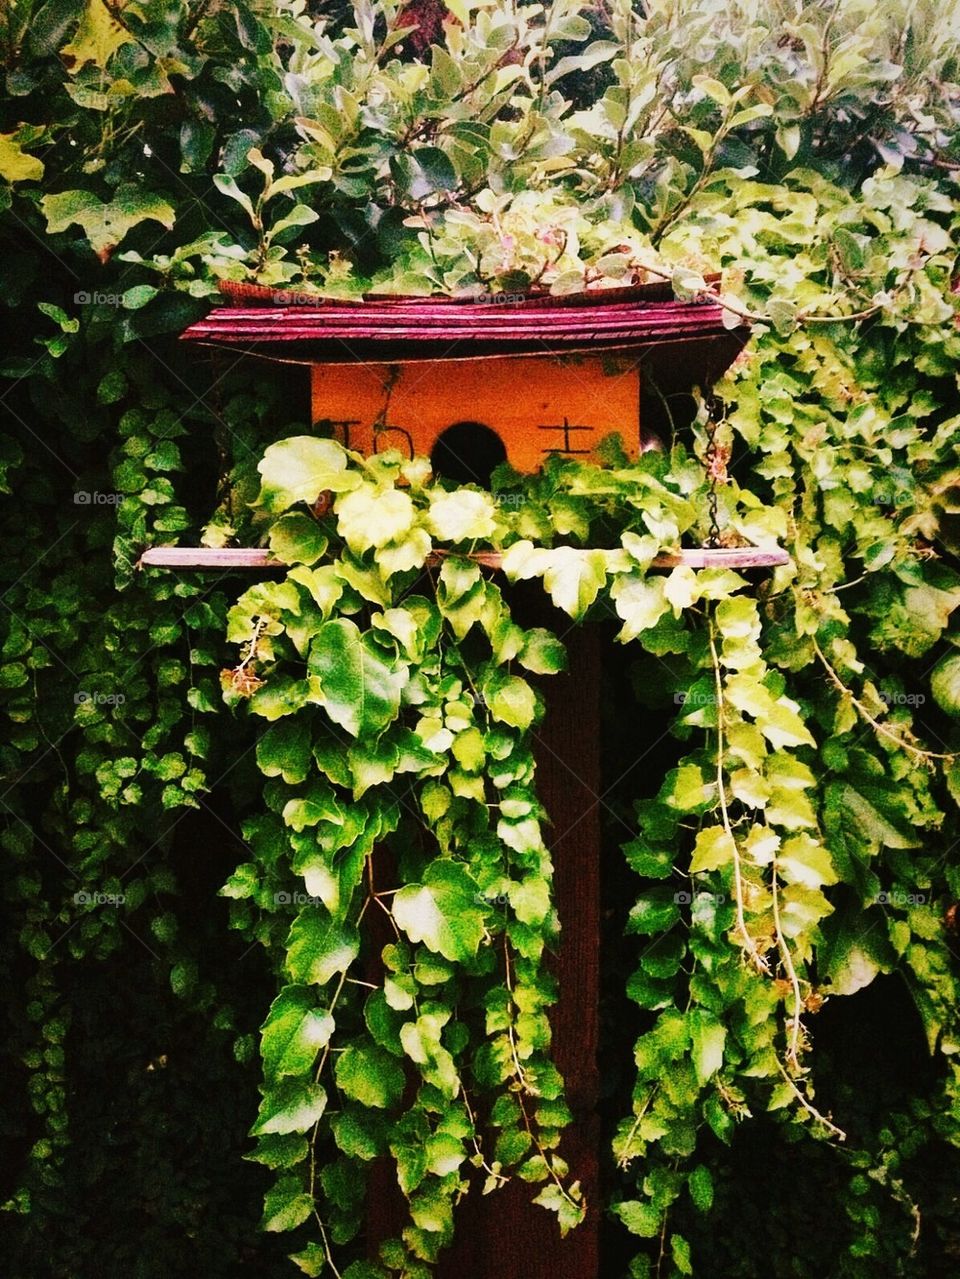 Birdhouse In Ivy